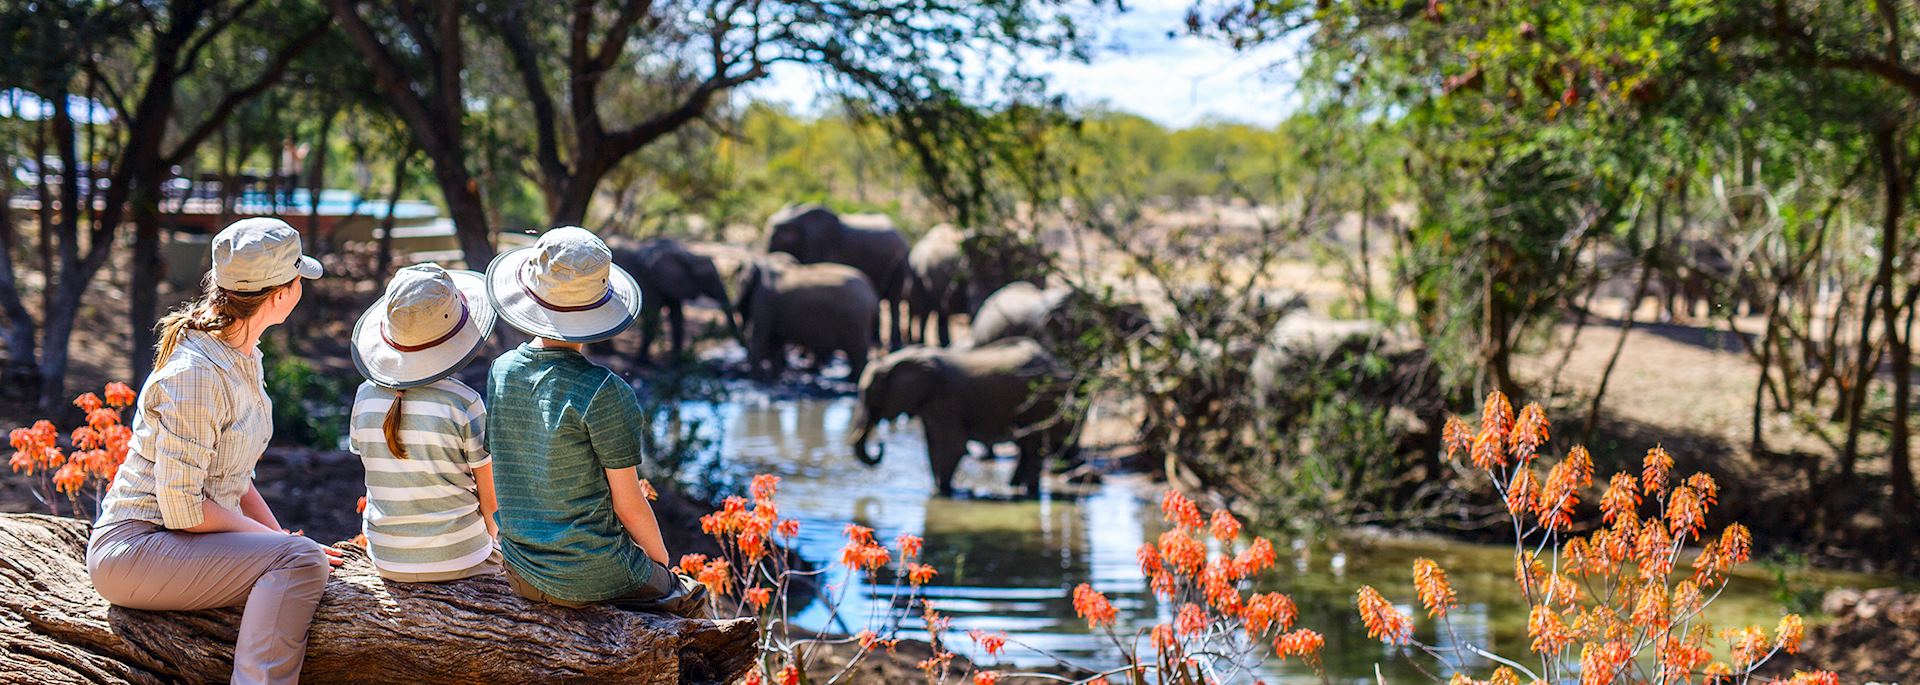 Family on an African safari